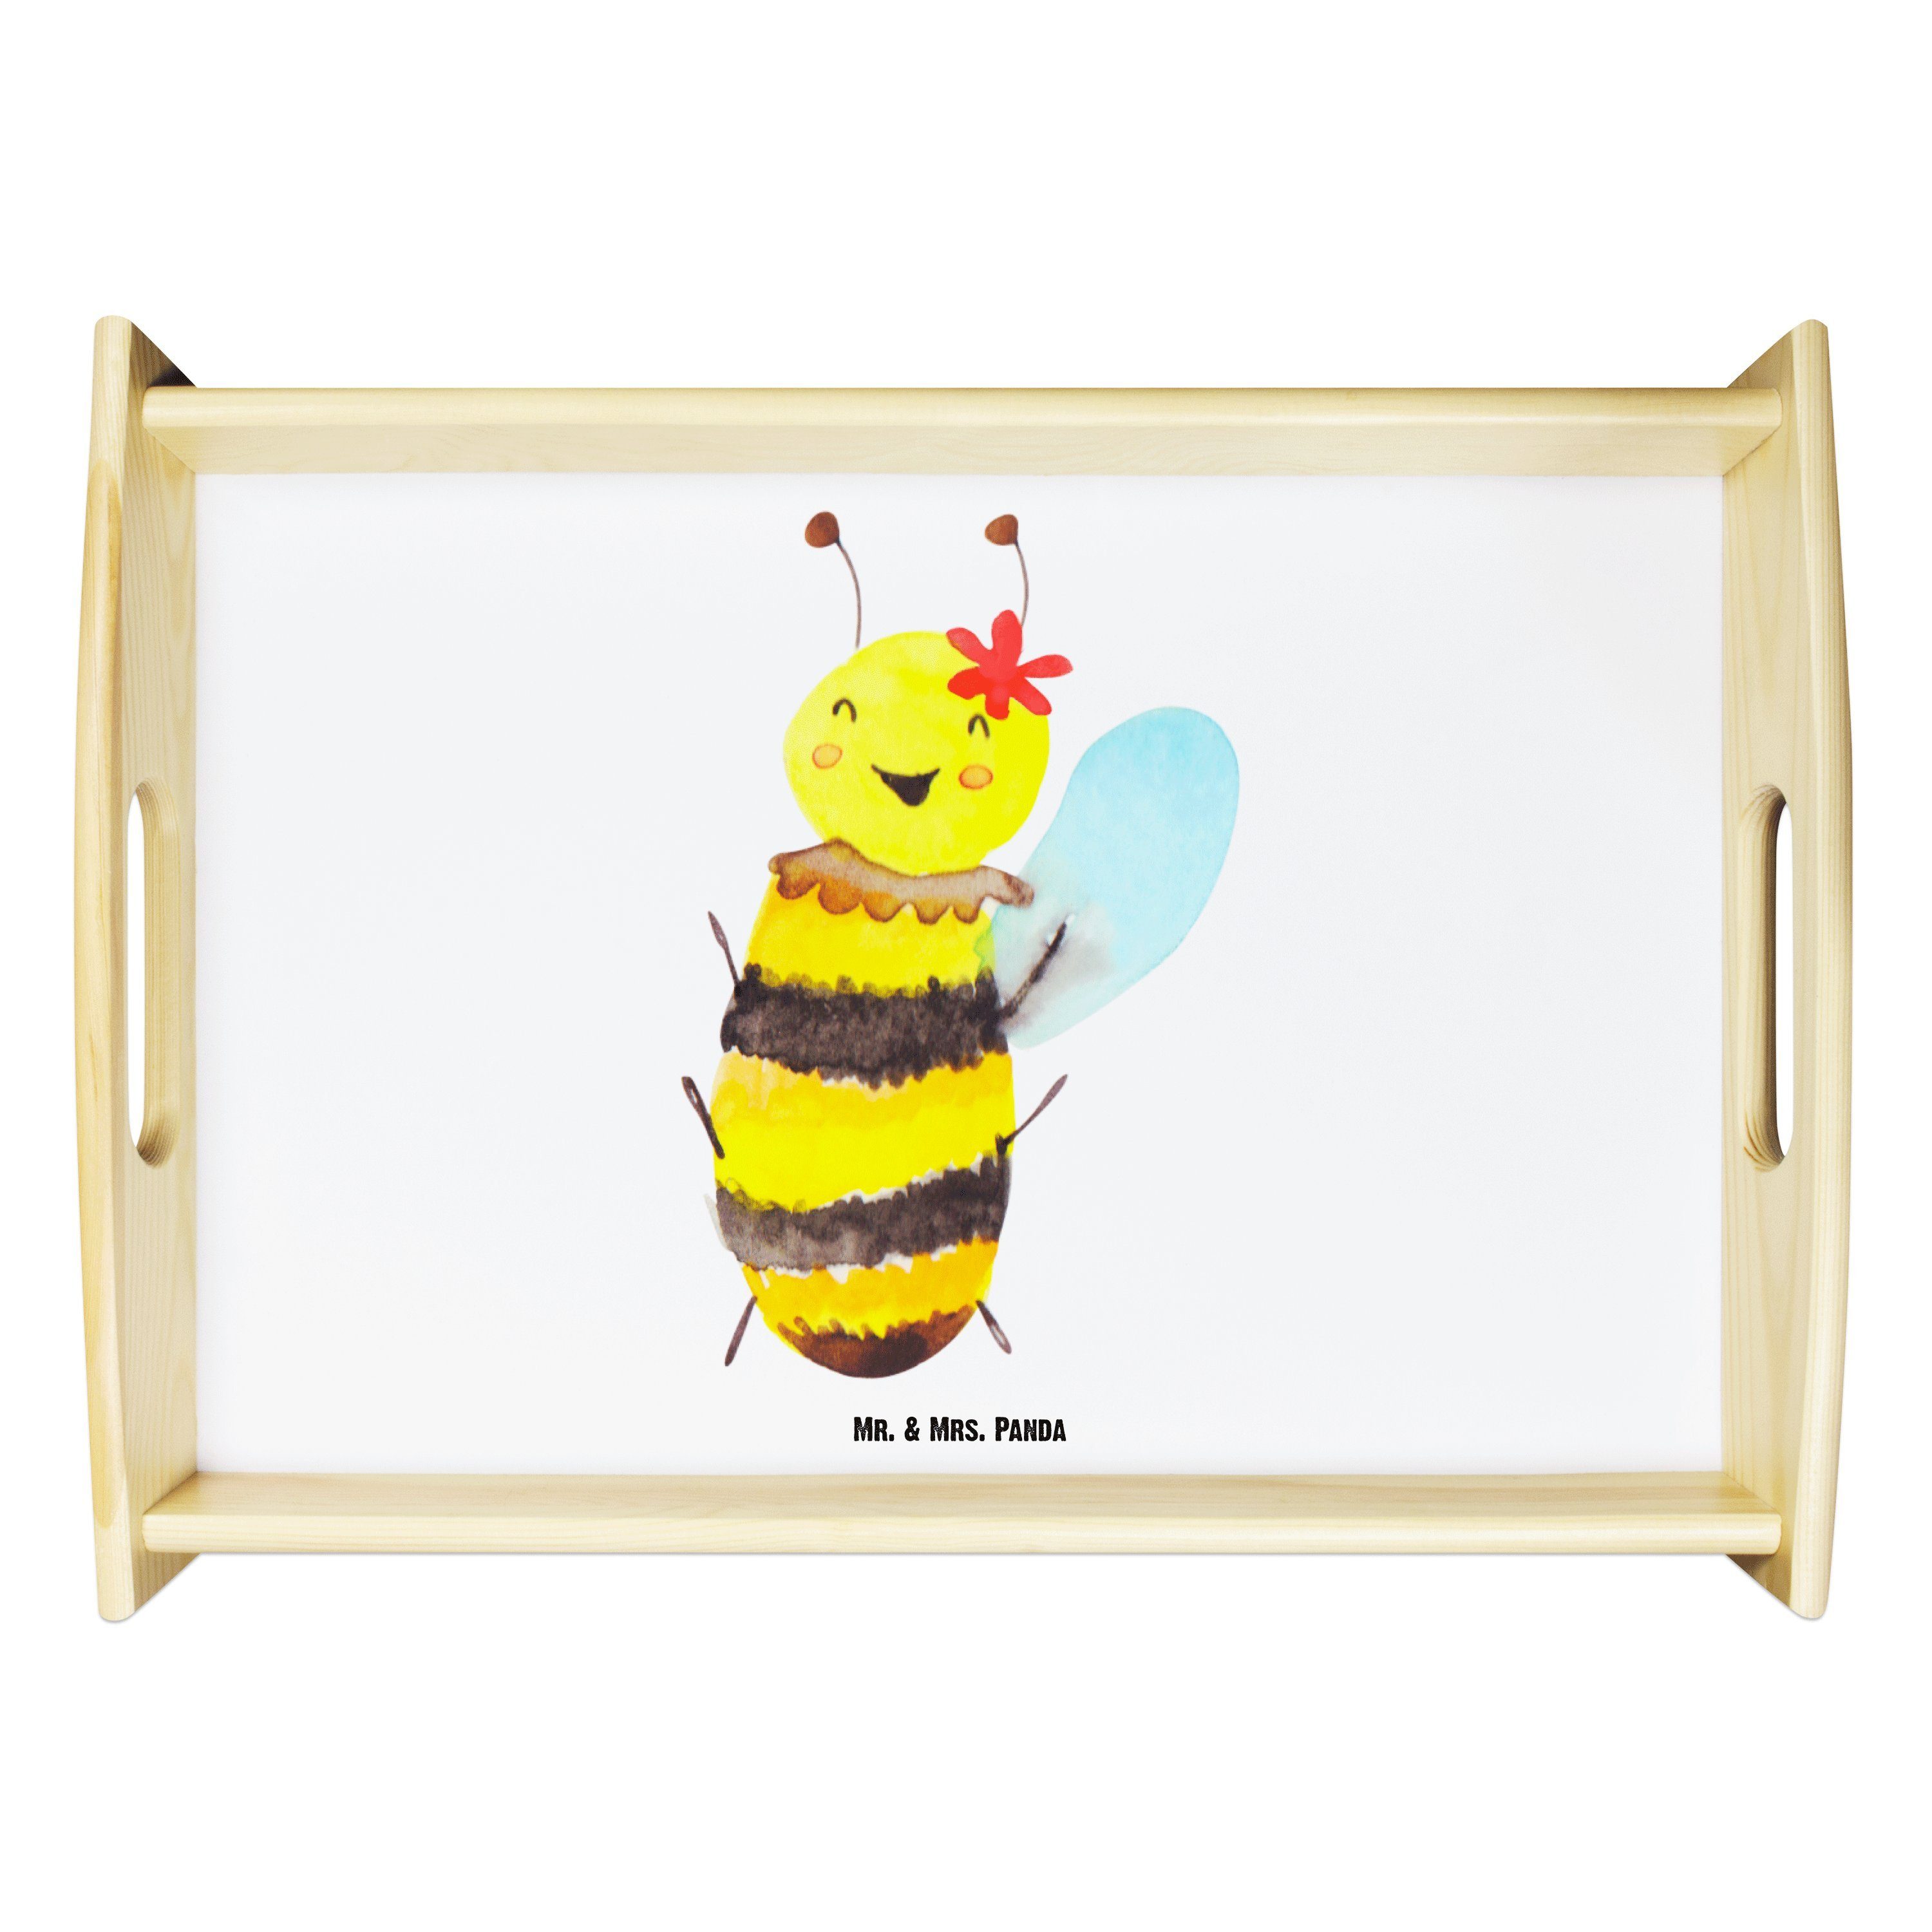 Mr. & Mrs. Panda Tablett Biene Happy - Weiß - Geschenk, Frühstückstablett, Tablett, Küchentabl, Echtholz lasiert, (1-tlg)